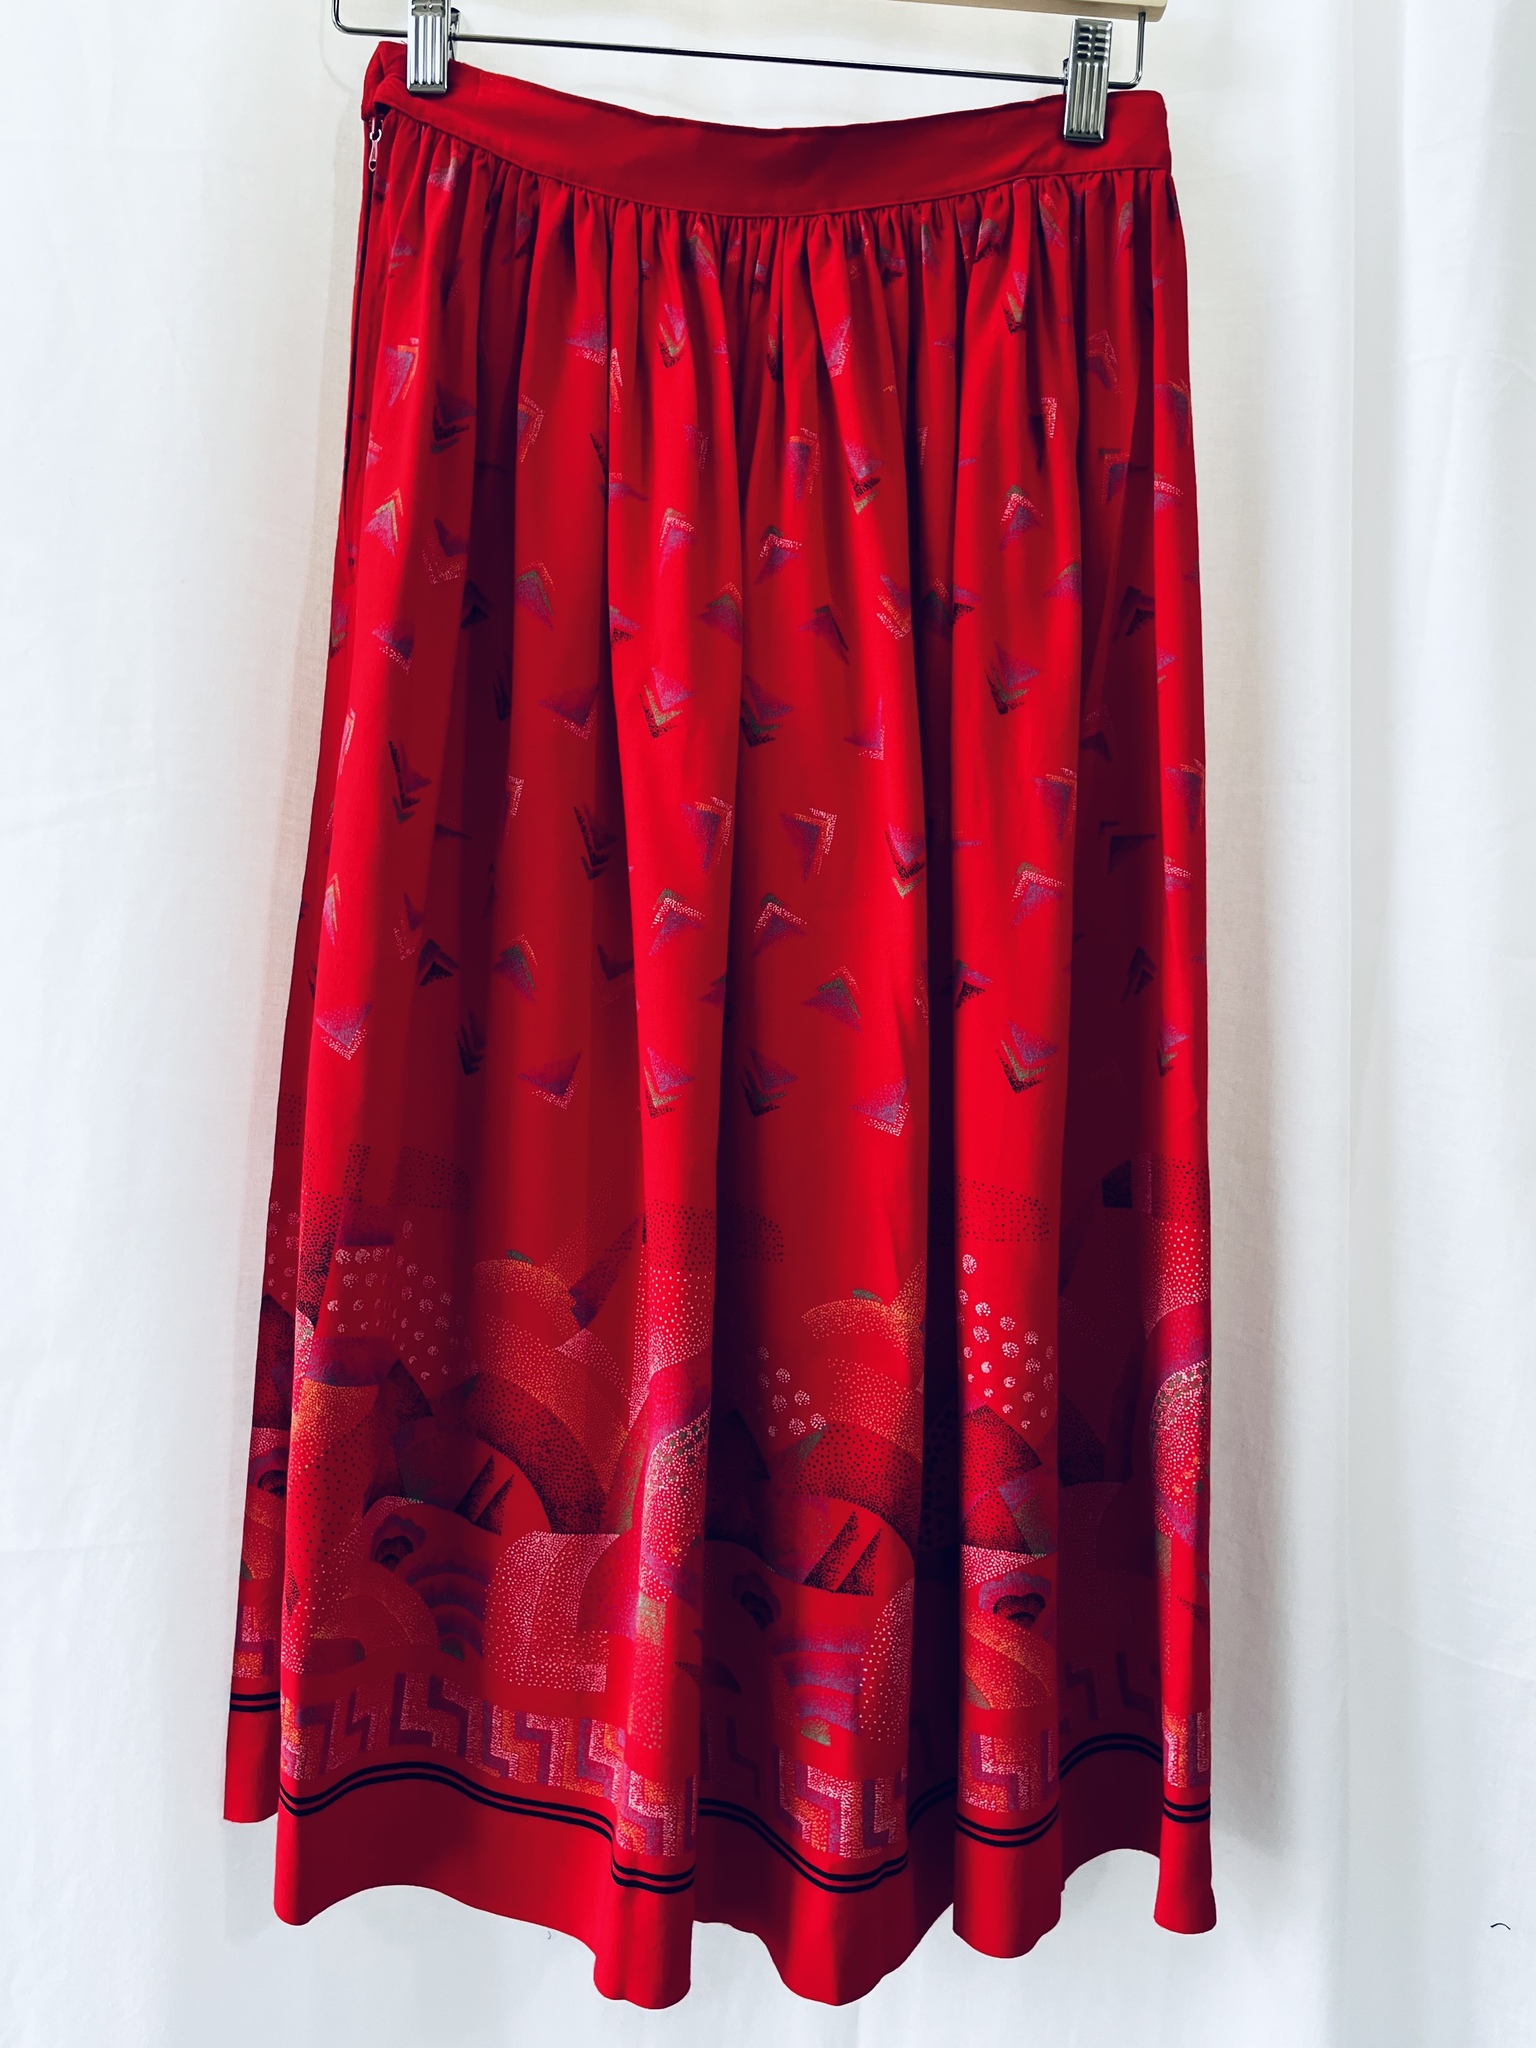 Vintage kjol med boho-mönster